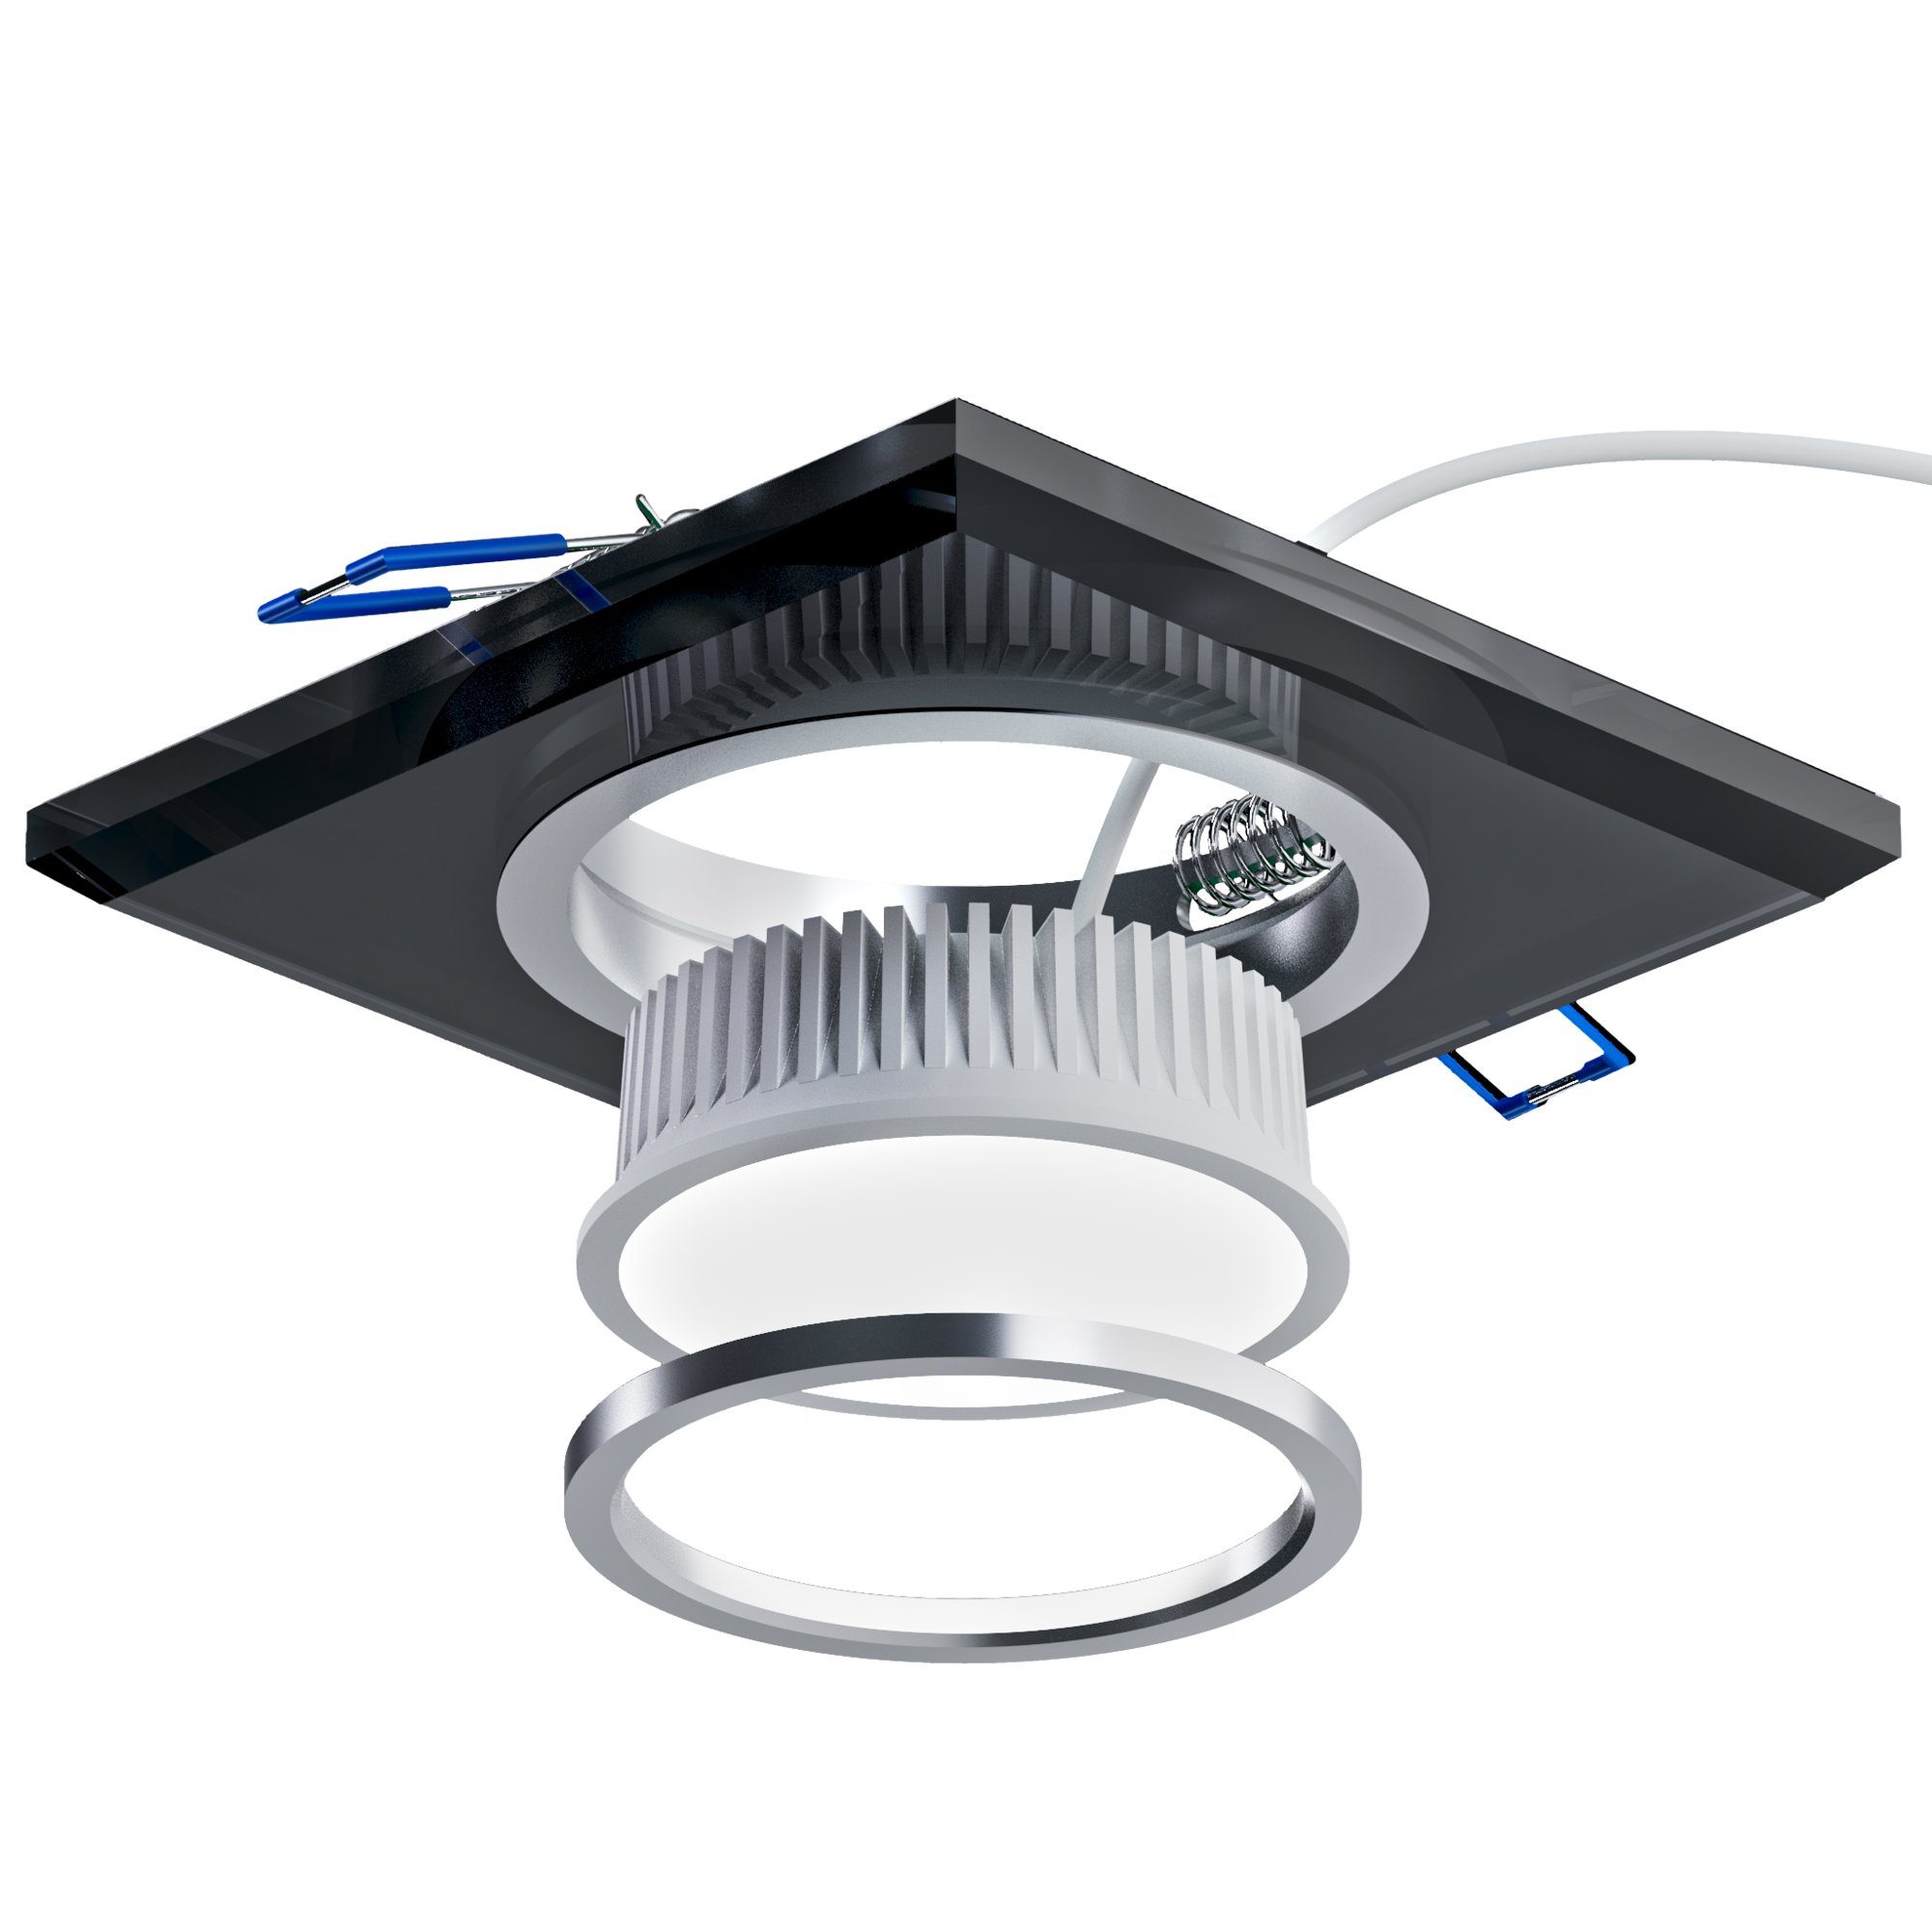 SSC-LUXon LED Einbaustrahler Flacher Glas schwarz Modul, Warmweiß dimmbar eckig LED Einbaustrahler LED mit